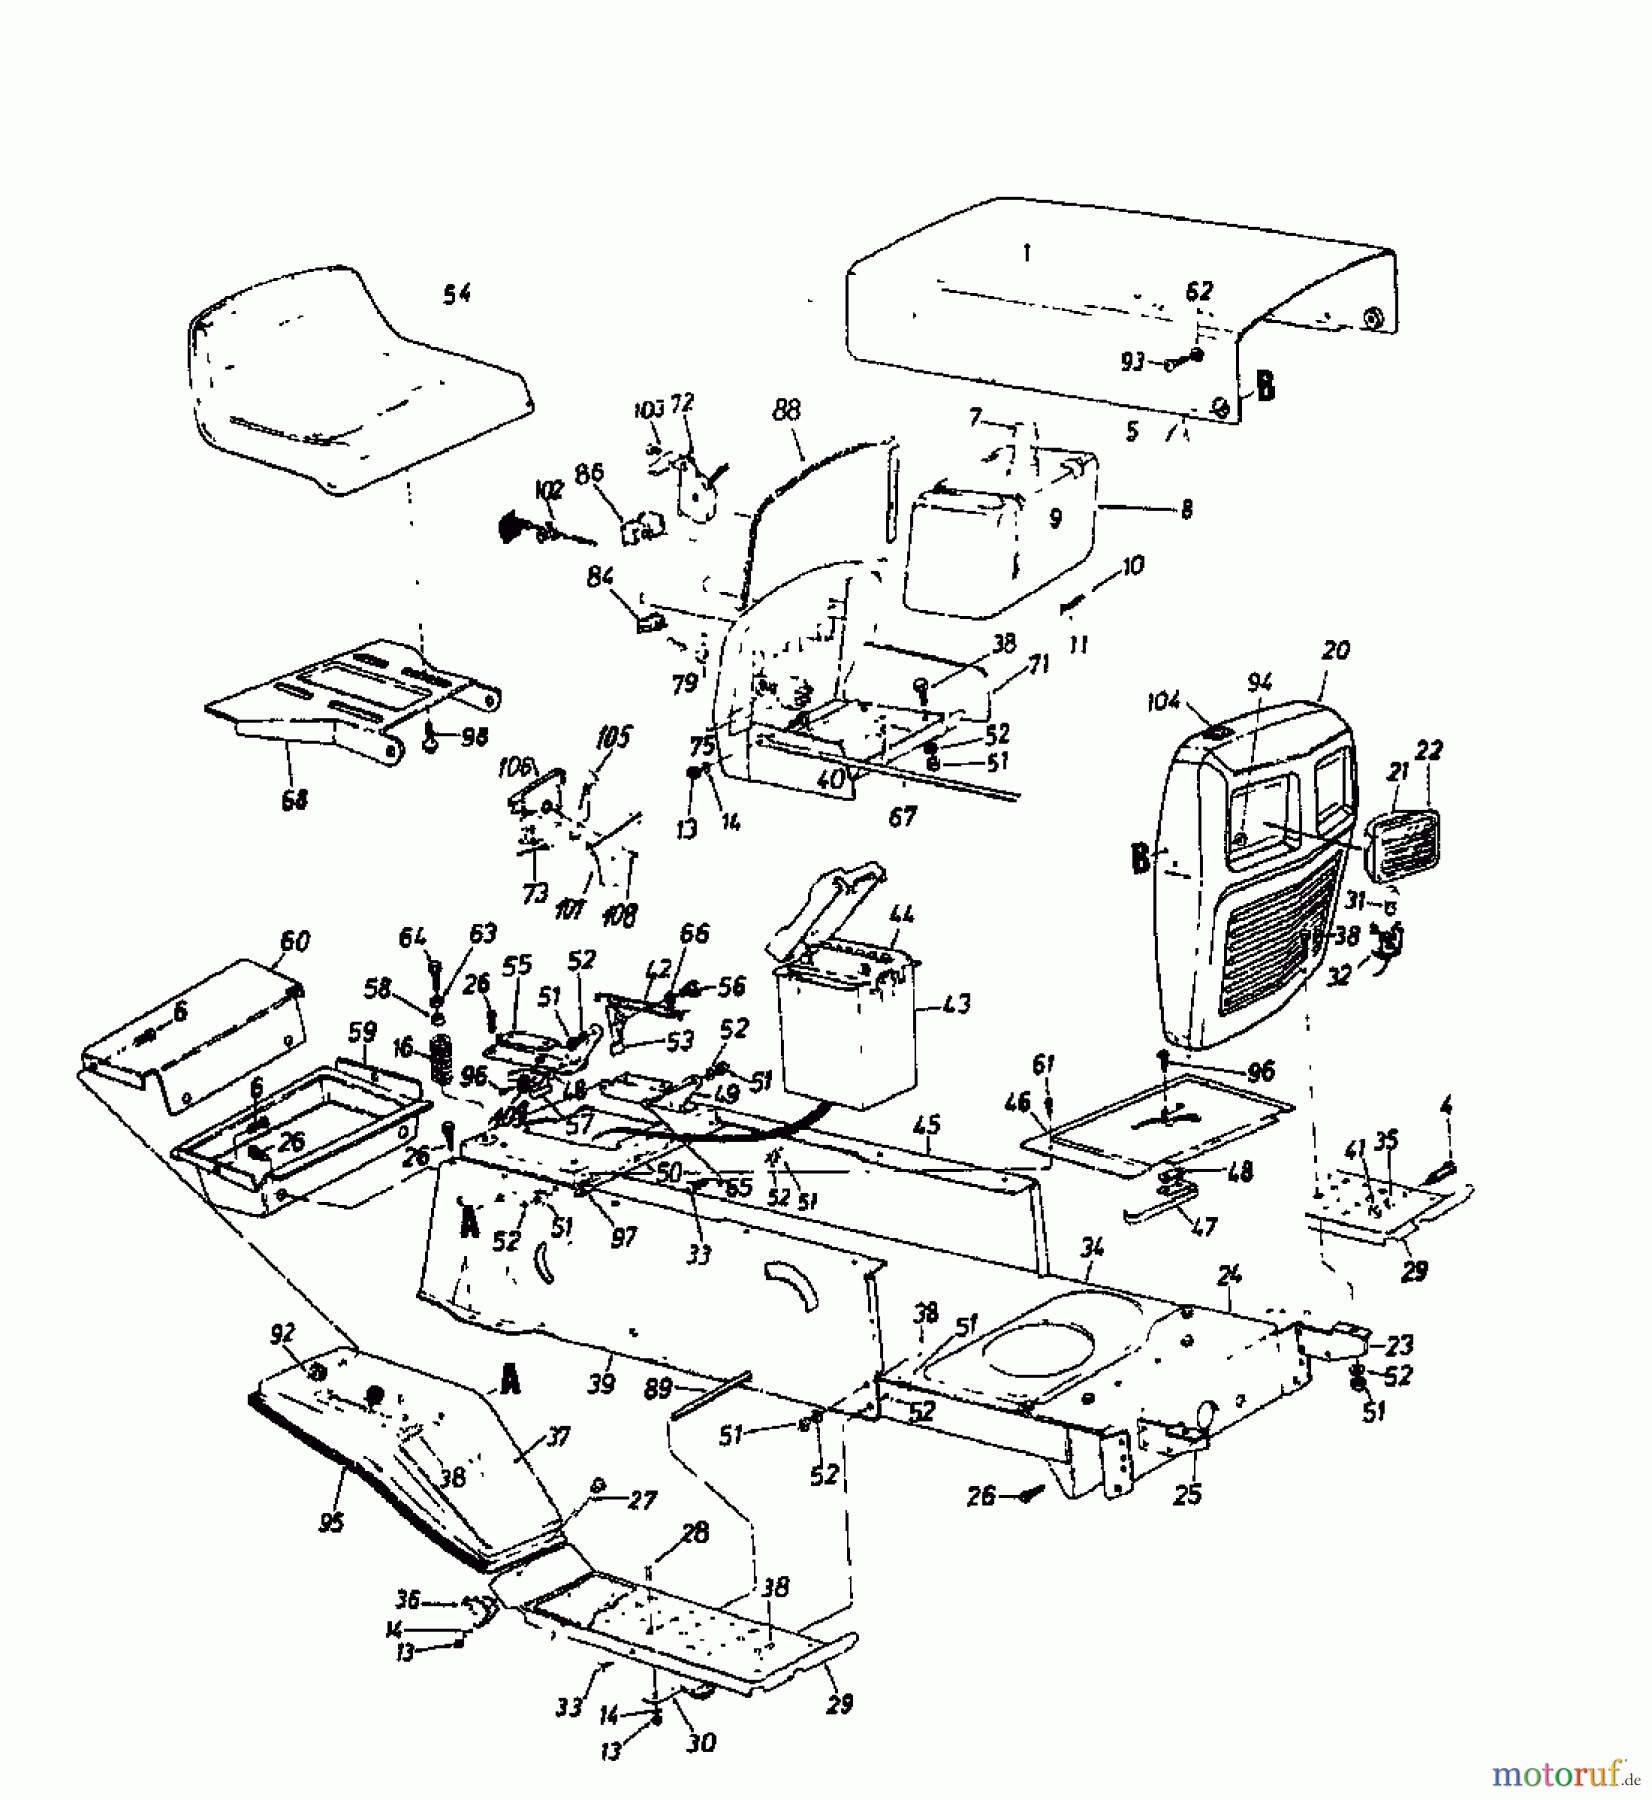  Super Tracteurs de pelouse Super 12-96 I/C 139-6520  (1989) Tableau de bord, Capot de moteur, Jupe